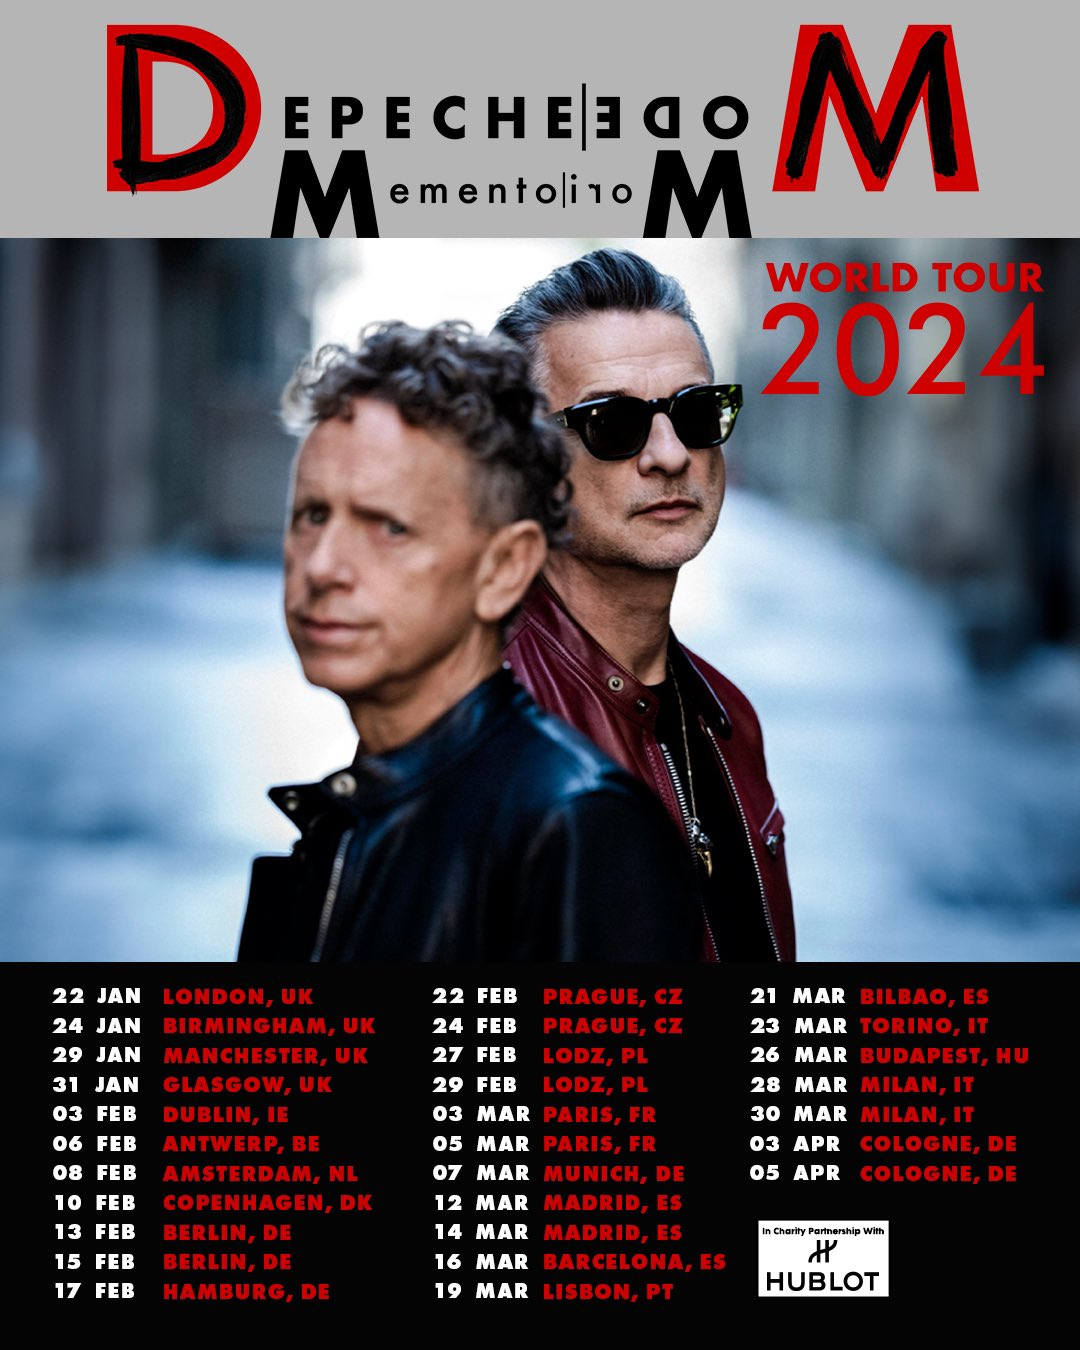 Depeche Mode - Memento Mori Tour 2024